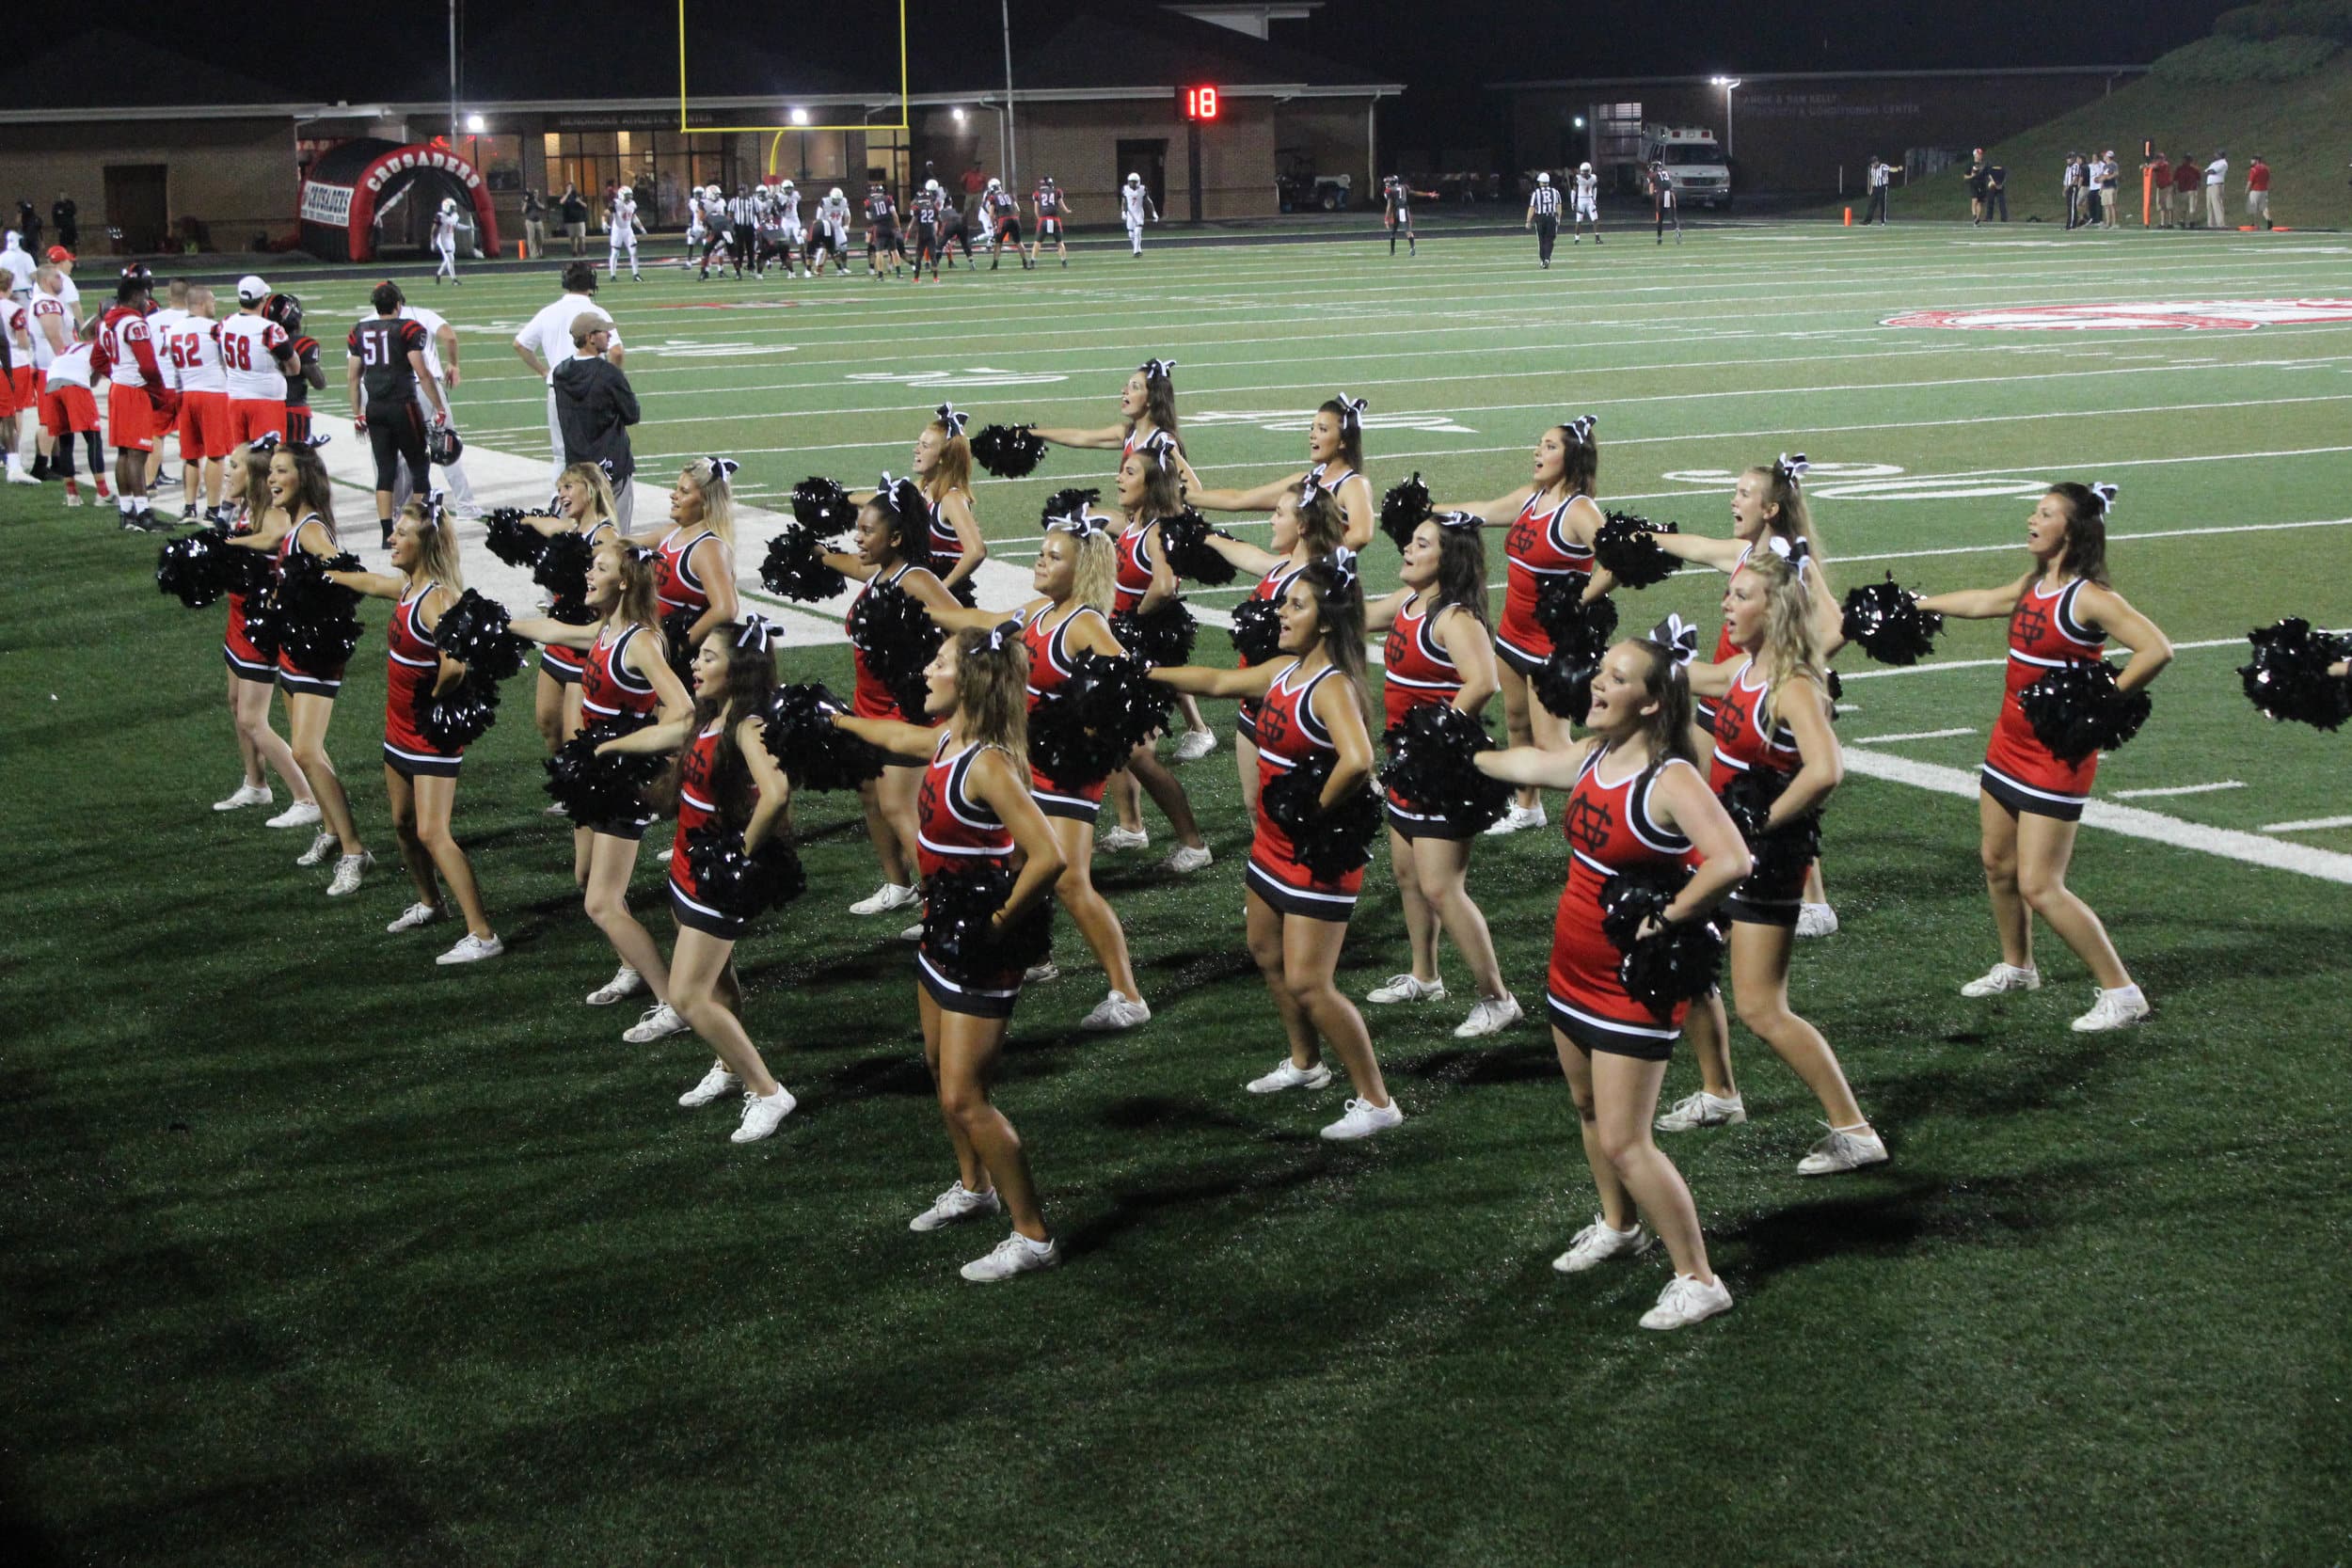 The cheerleaders did a good job leading us in cheer.